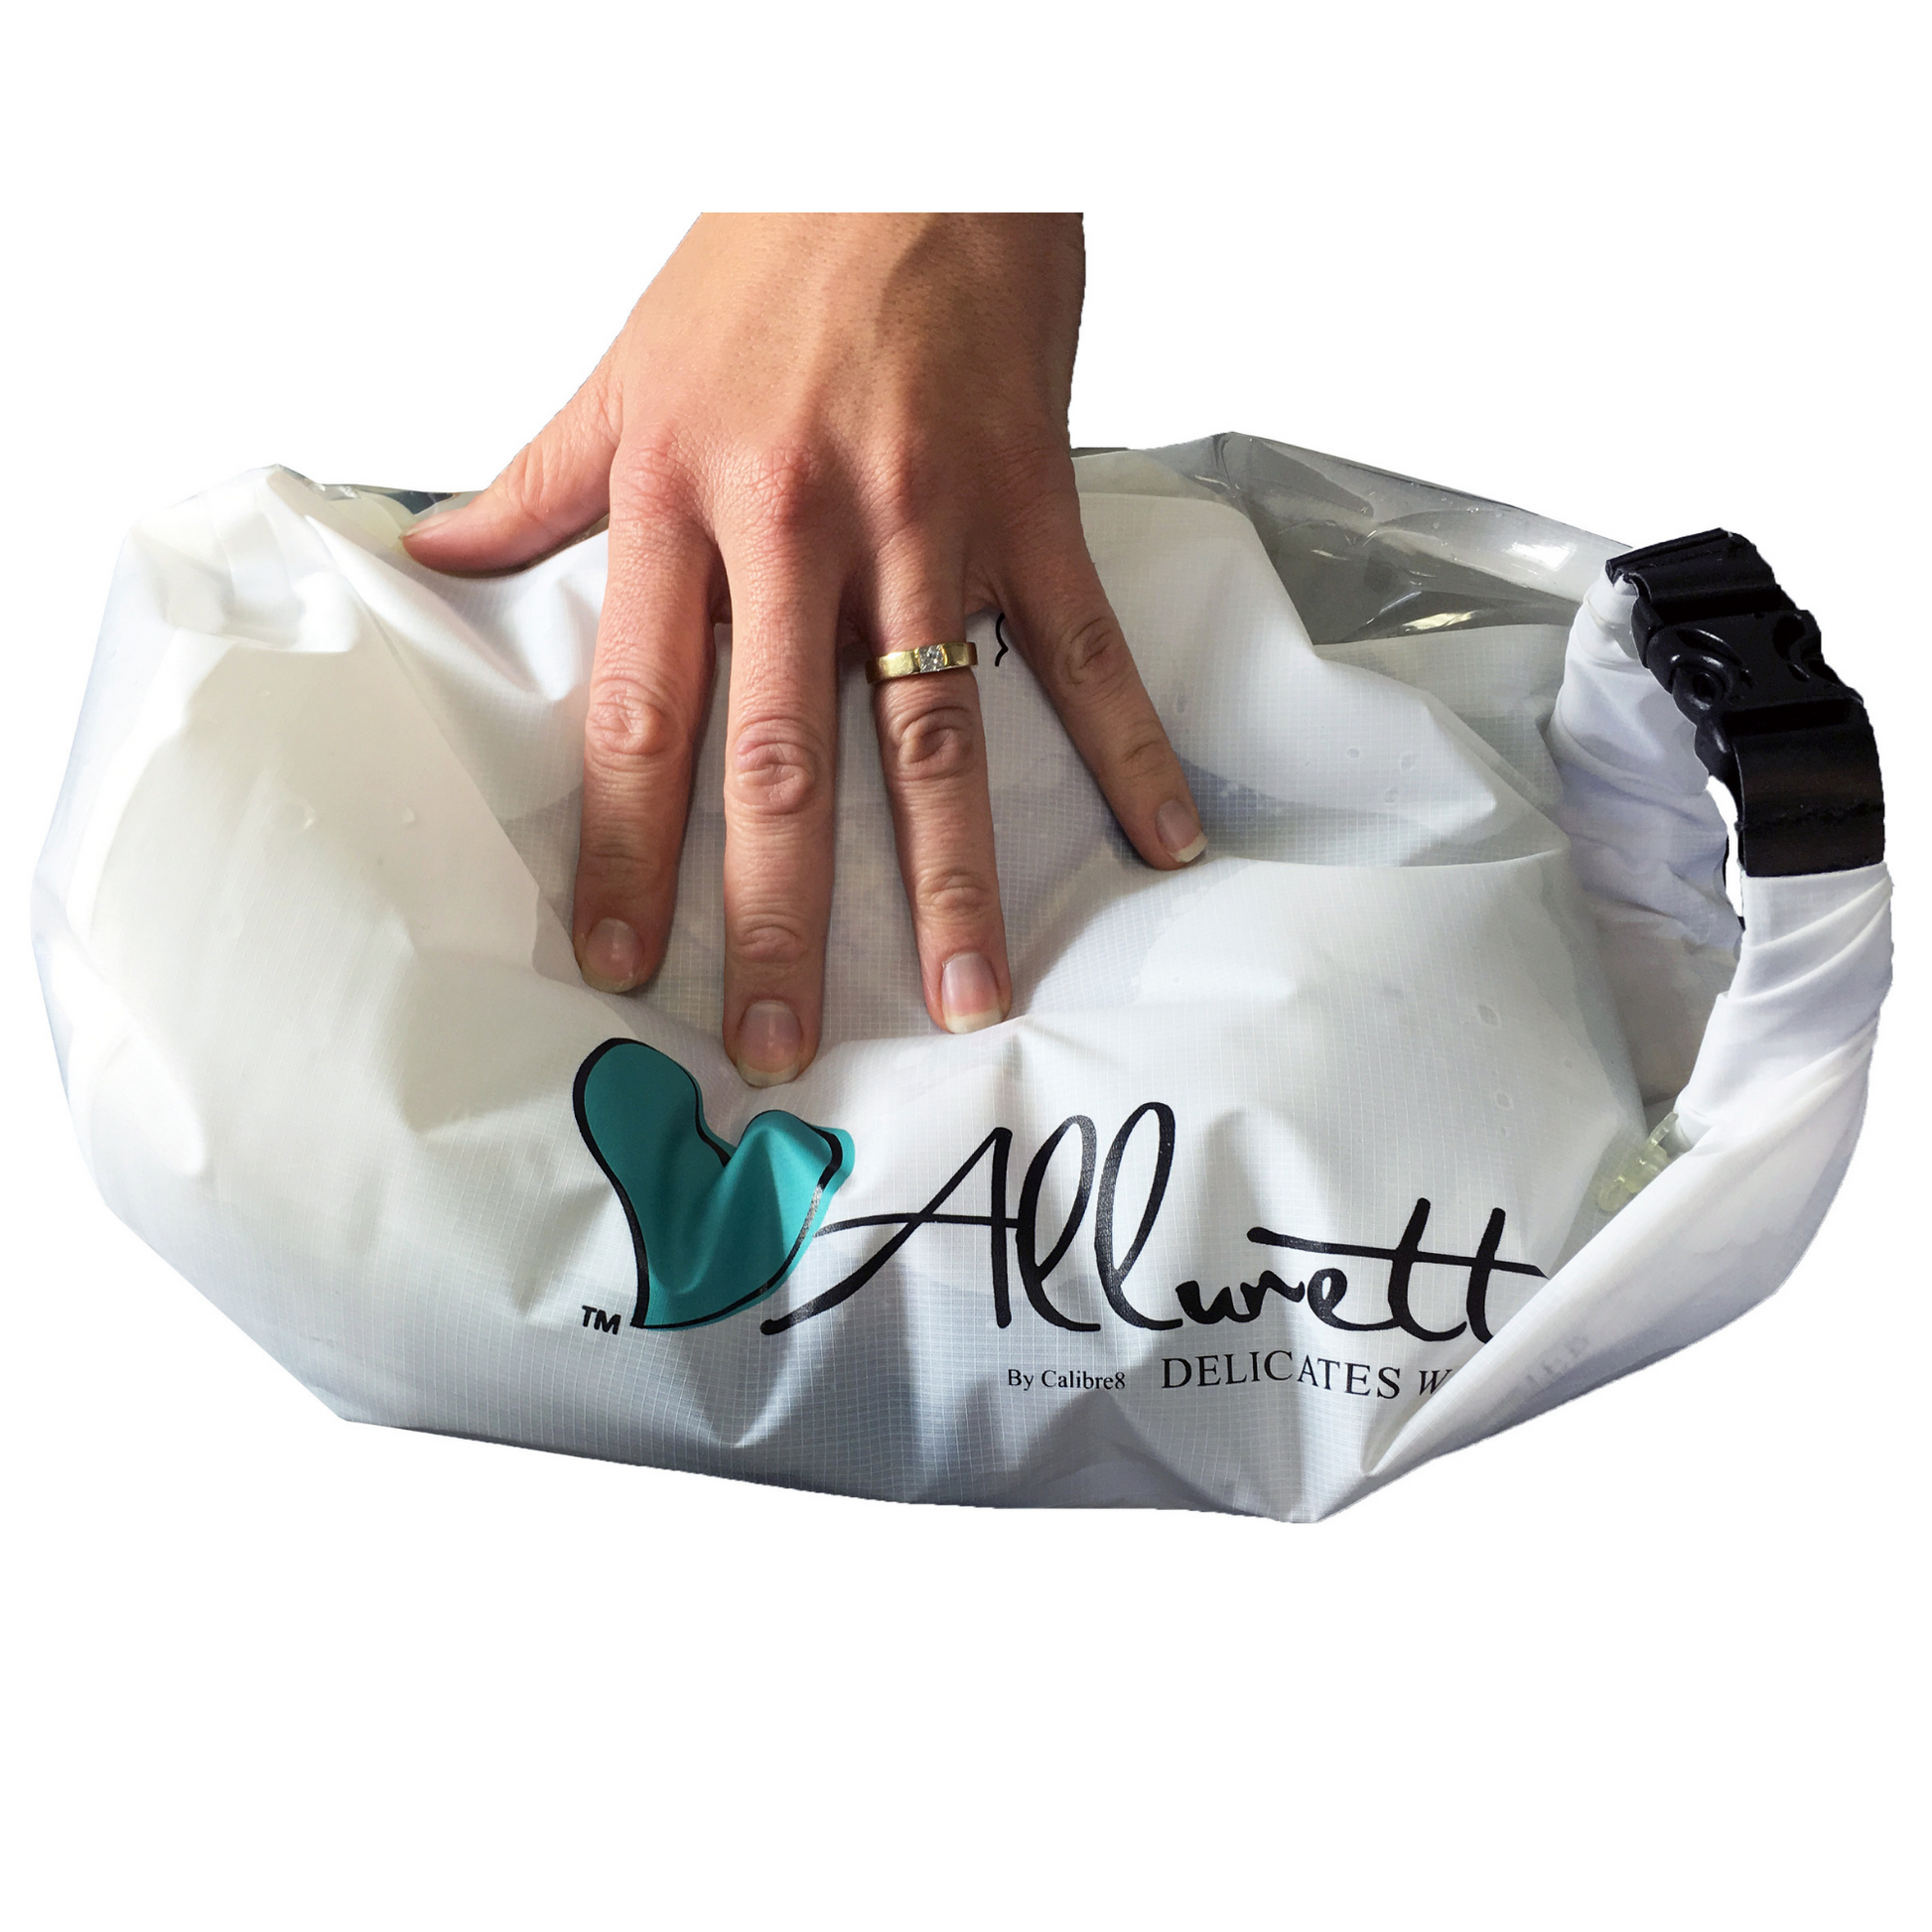 Allurette washer - A small, portable washing machine for delicate clothing.  – ScrubbaOnline